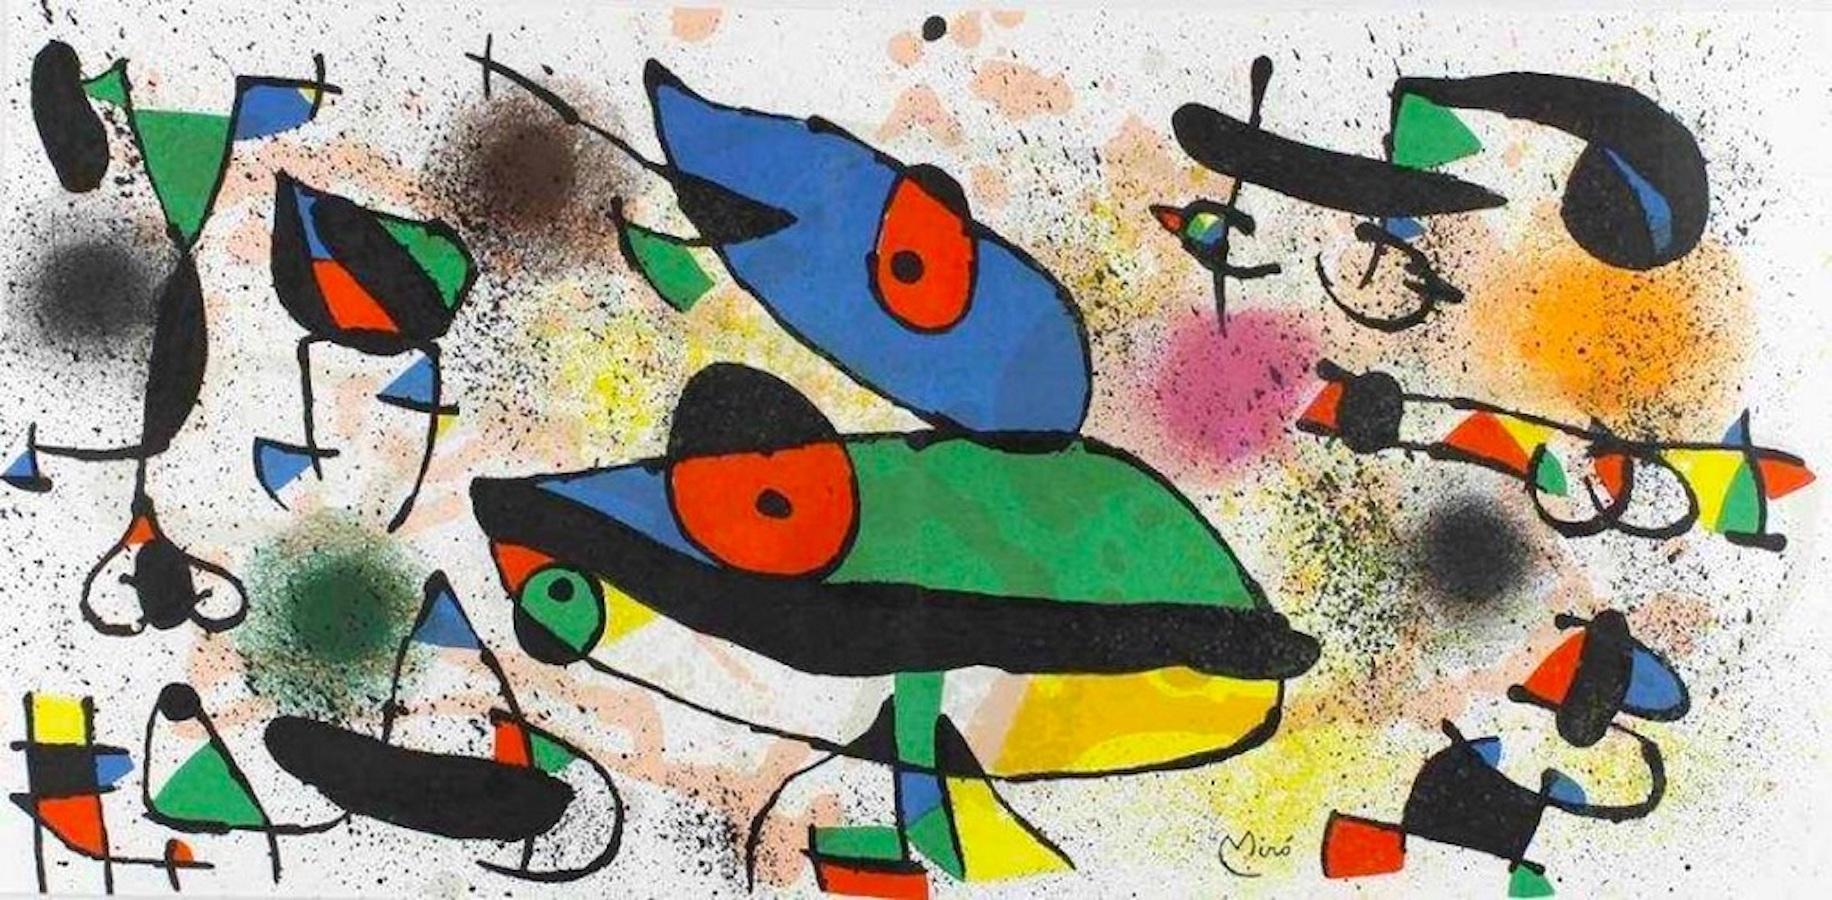 Joan Miró Abstract Print - Sculptures - Original Lithograph by Joan Mirò - 1974